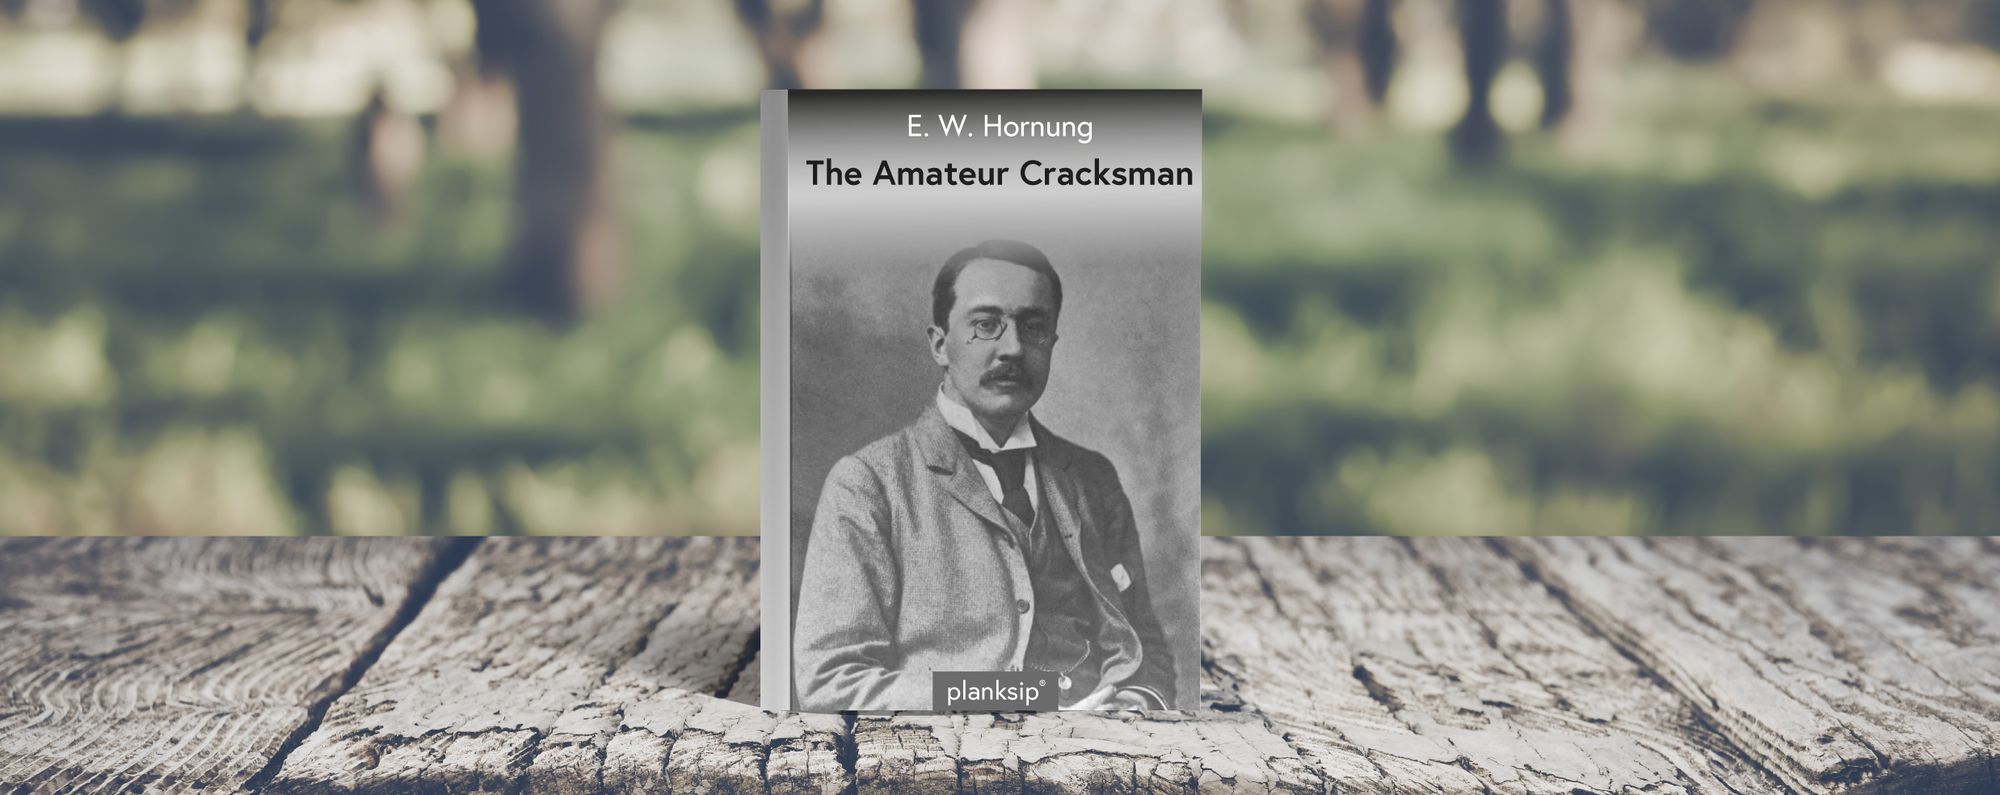 The Amateur Cracksman by E.W. Hornung (1866-1921). Published by planksip